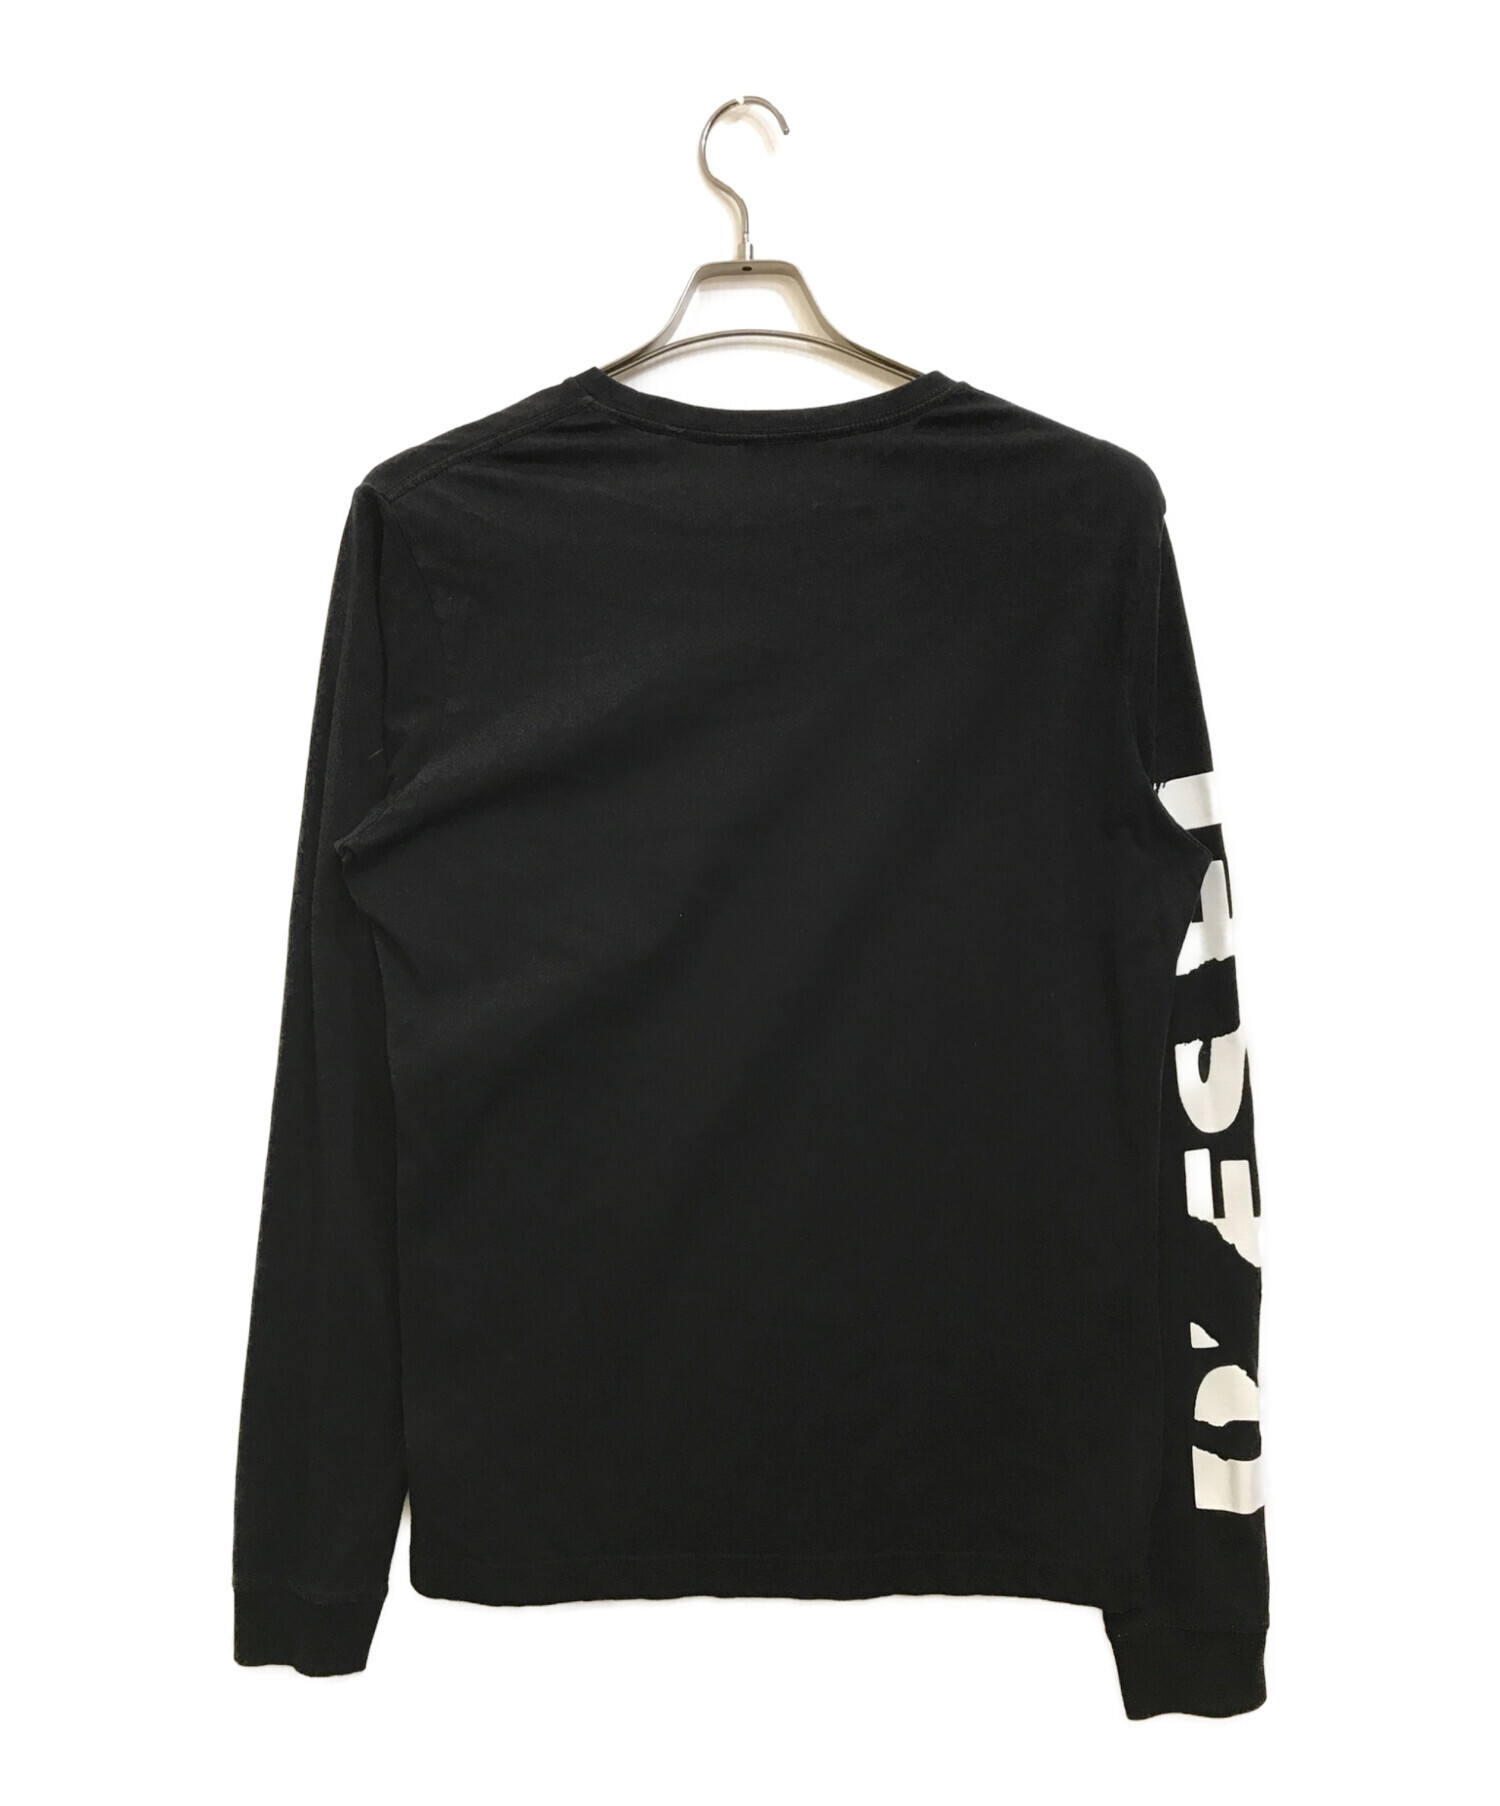 DIESEL (ディーゼル) ロングスリーブTシャツ ブラック サイズ:L